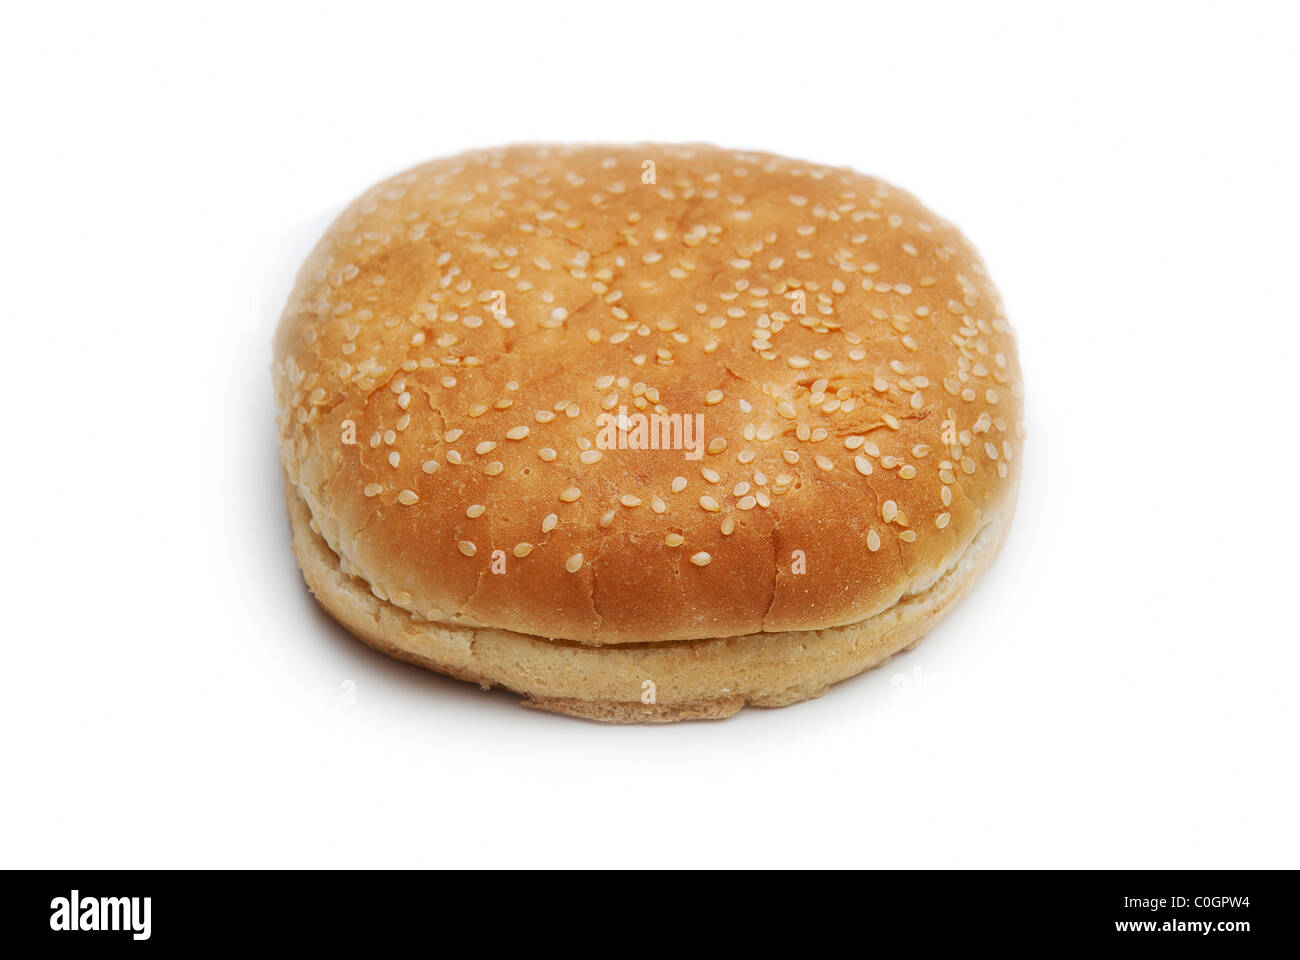 Hamburger bun with sesame on white background Stock Photo